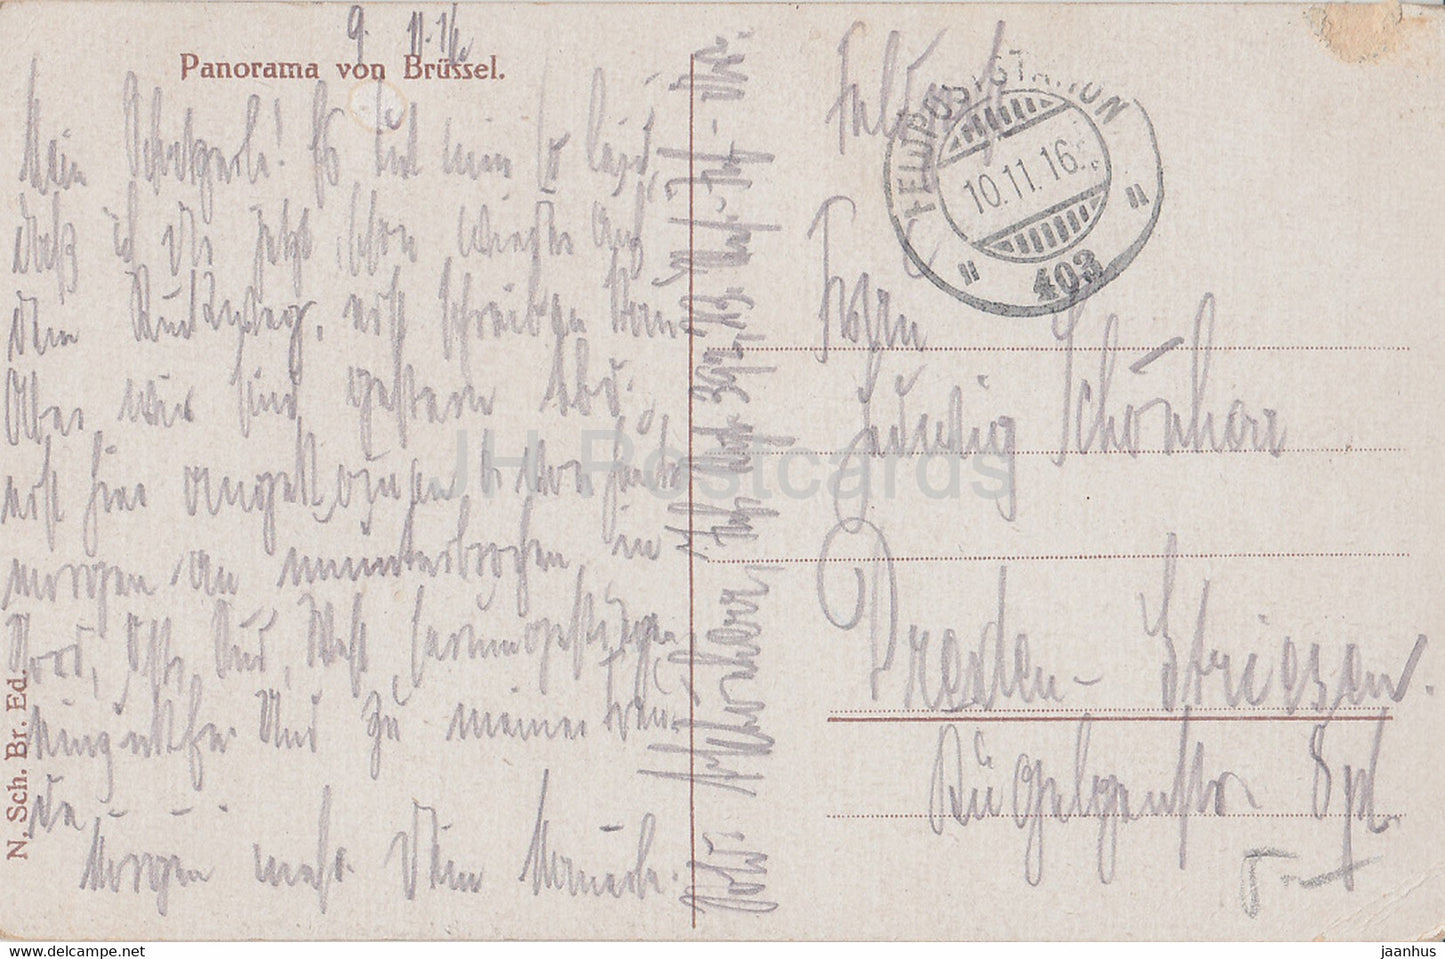 Bruxelles - Brussels - Panorama - Feldpost - old postcard - 1916 - Belgium - used